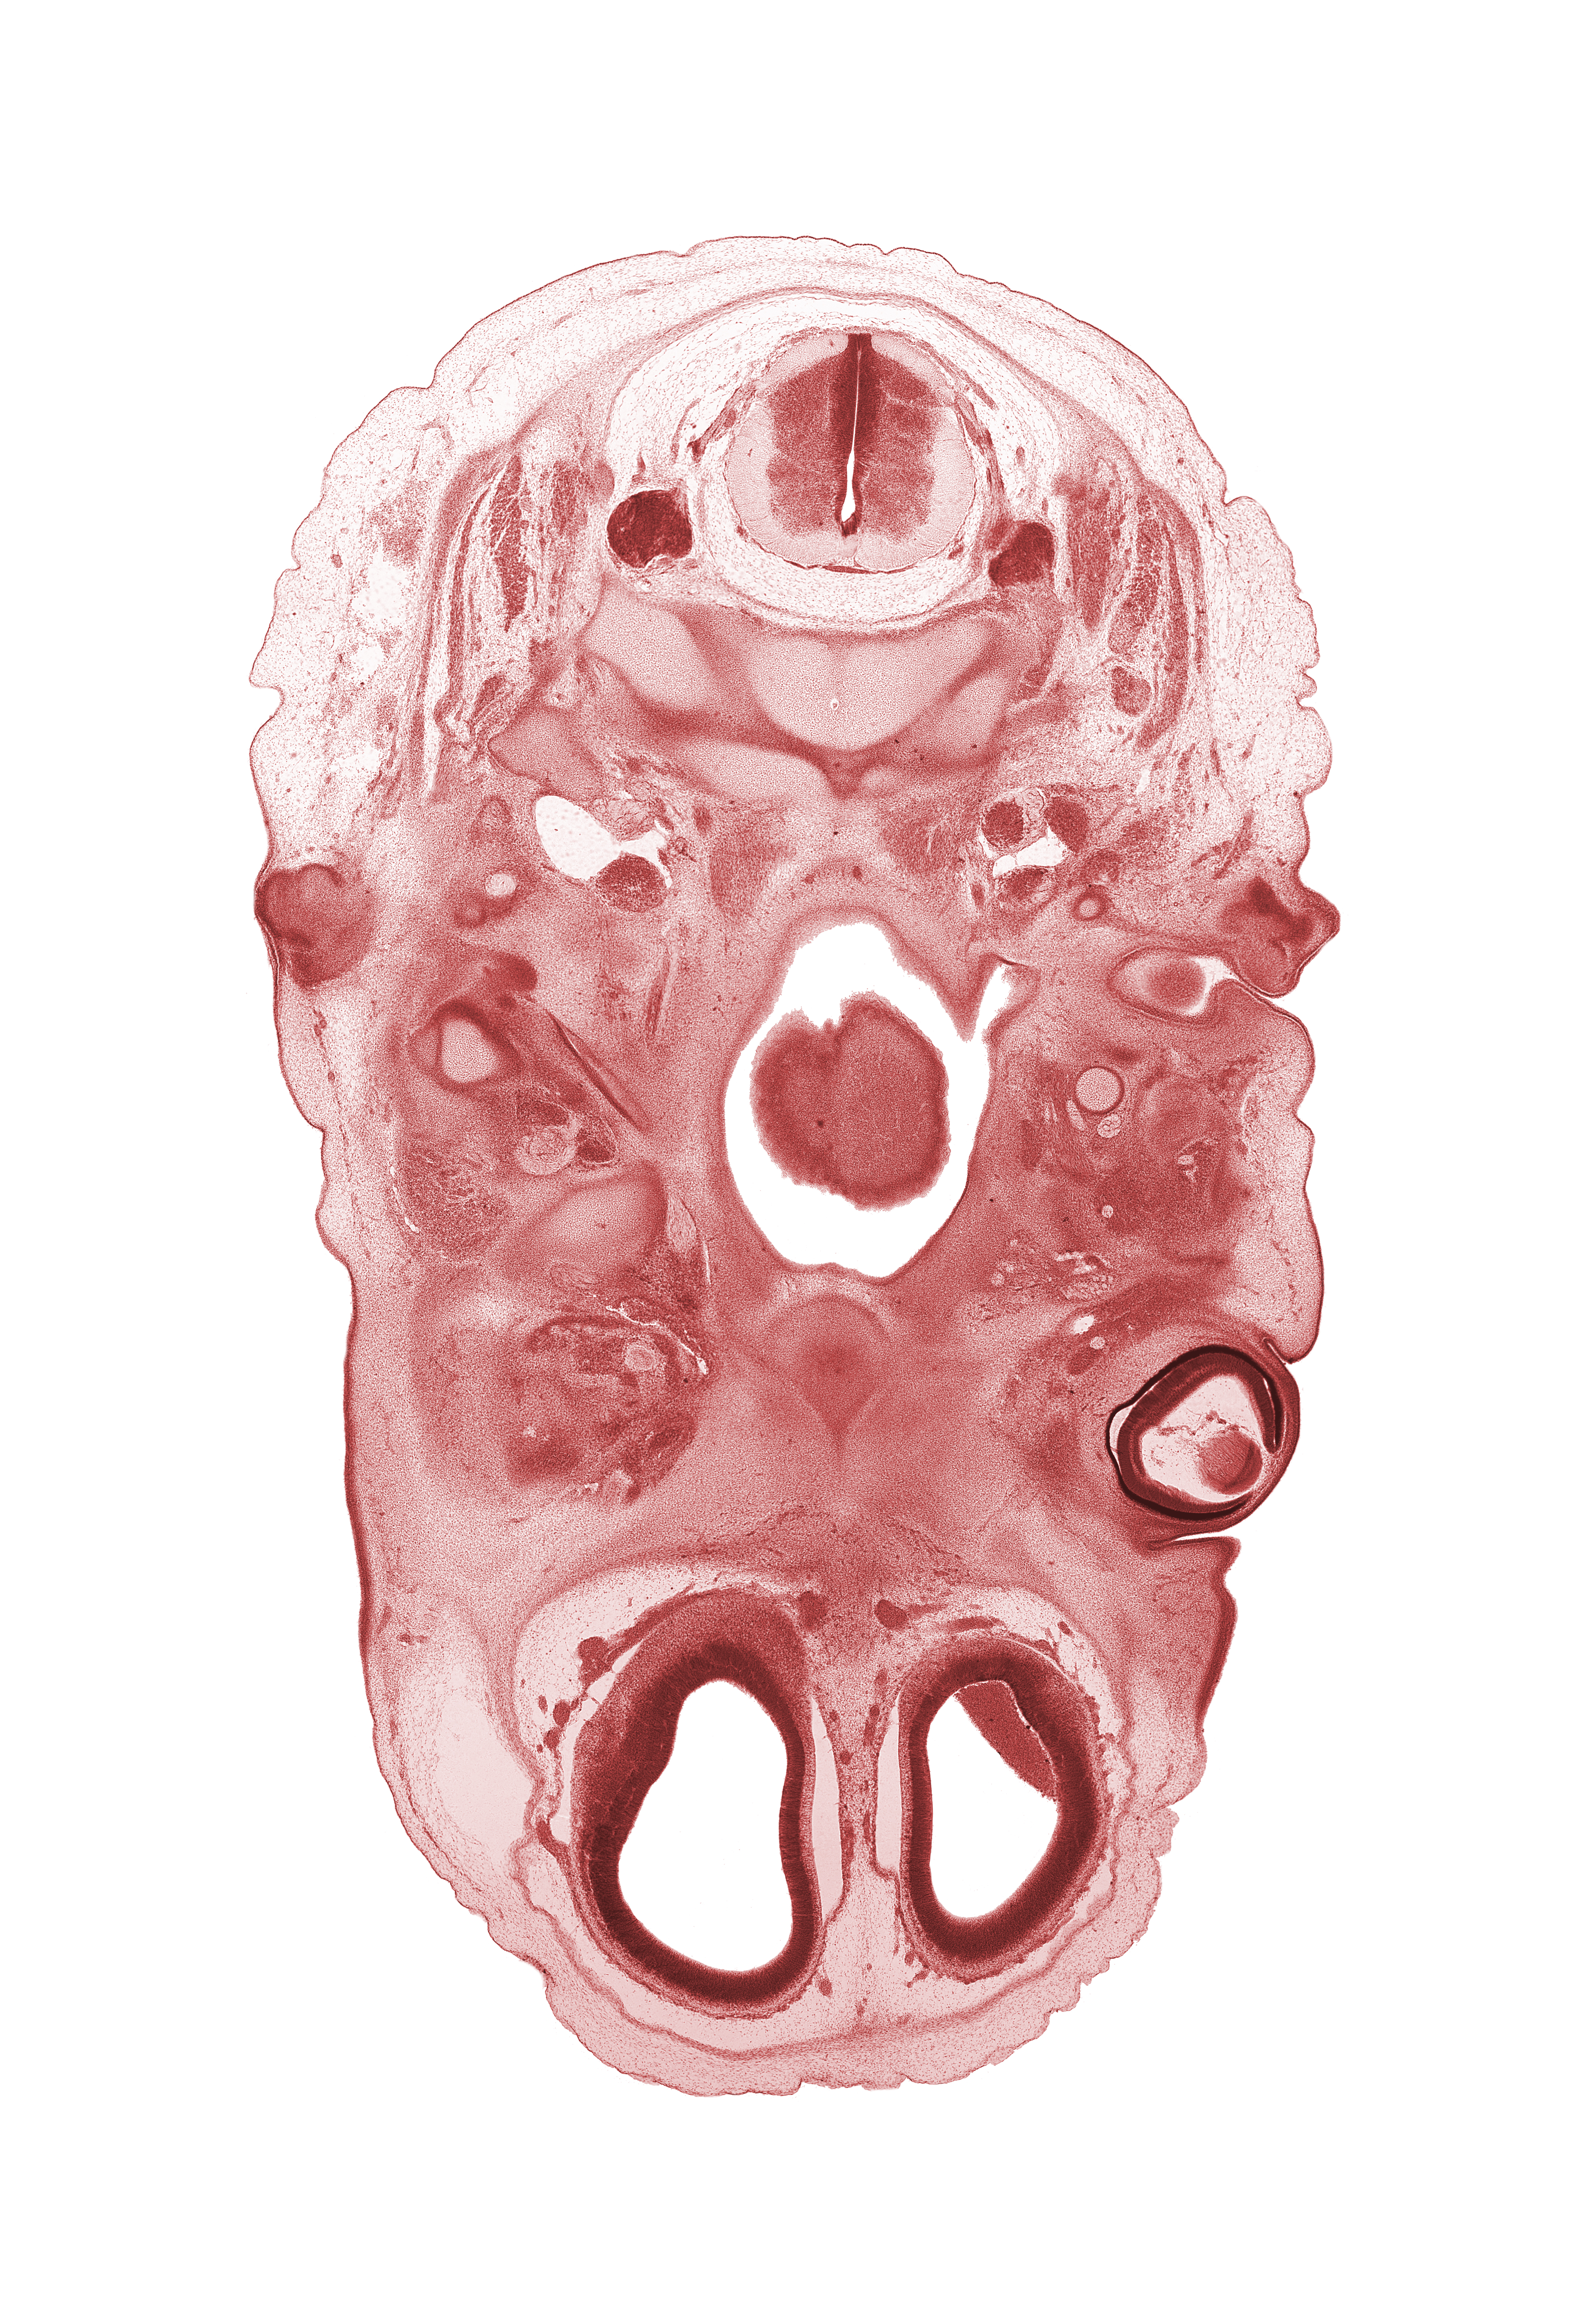 C-2 spinal ganglion, C-2 spinal nerve, C-2 vertebra (axis), accessory nerve (CN XI), artifact separation(s), blastema of extra-ocular muscle(s), blastemata of mastication muscles, edge of lens, foramen cecum of tongue, glossopharyngeal nerve (CN IX), inferior ganglion of vagus nerve (CN X), internal carotid artery, internal jugular vein, nasopharynx, neural layer of retina, olfactory bulb, osteogenic layer, pharyngeal arch 1 cartilage (Meckel), pharyngeal arch 2 cartilage, pigmented layer of retina, subarachnoid space